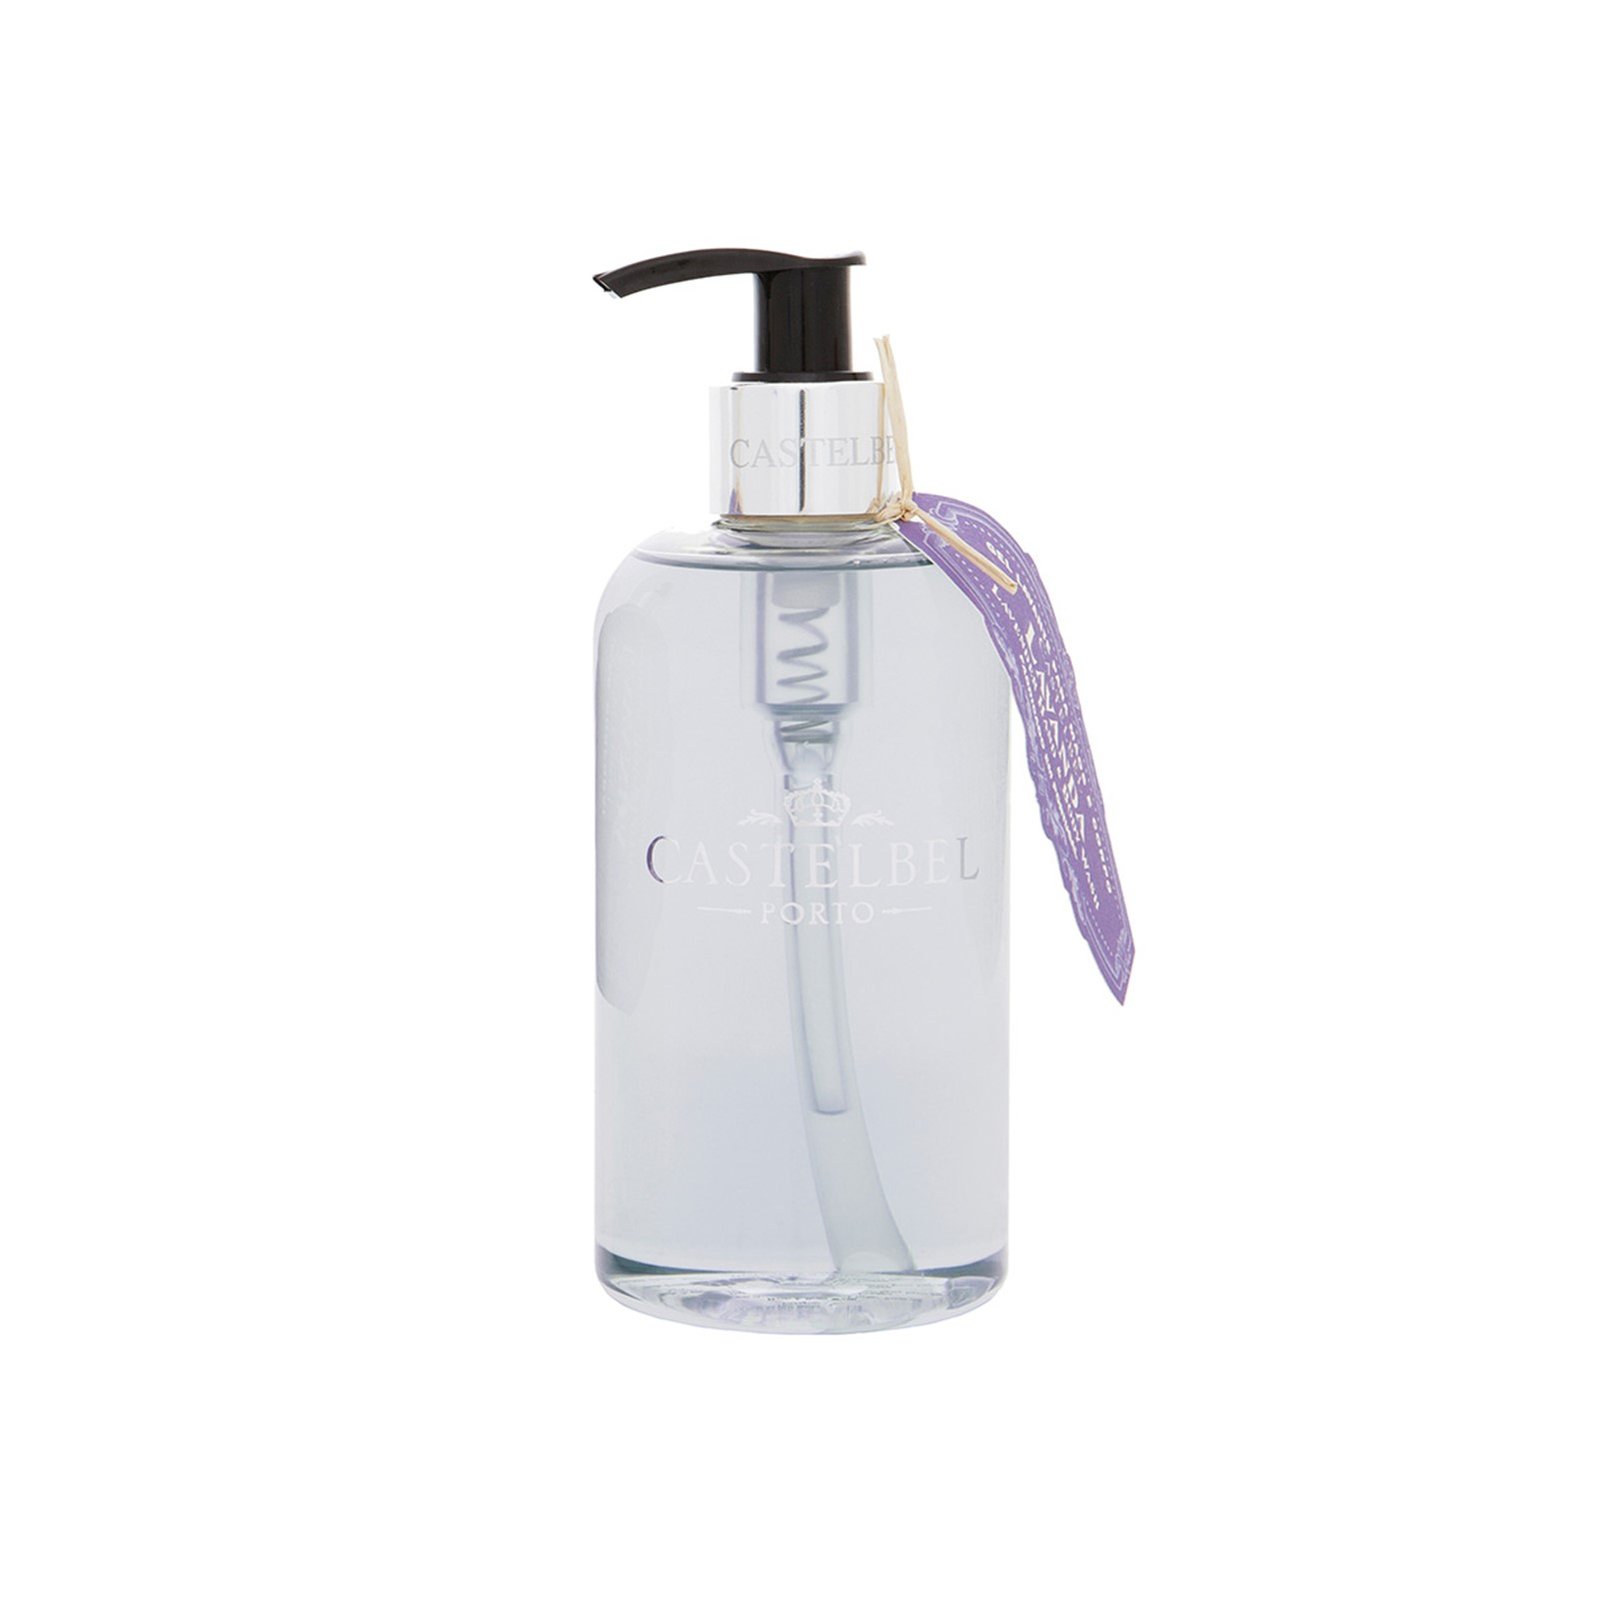 Castelbel Lavender Hand & Body Wash 300ml